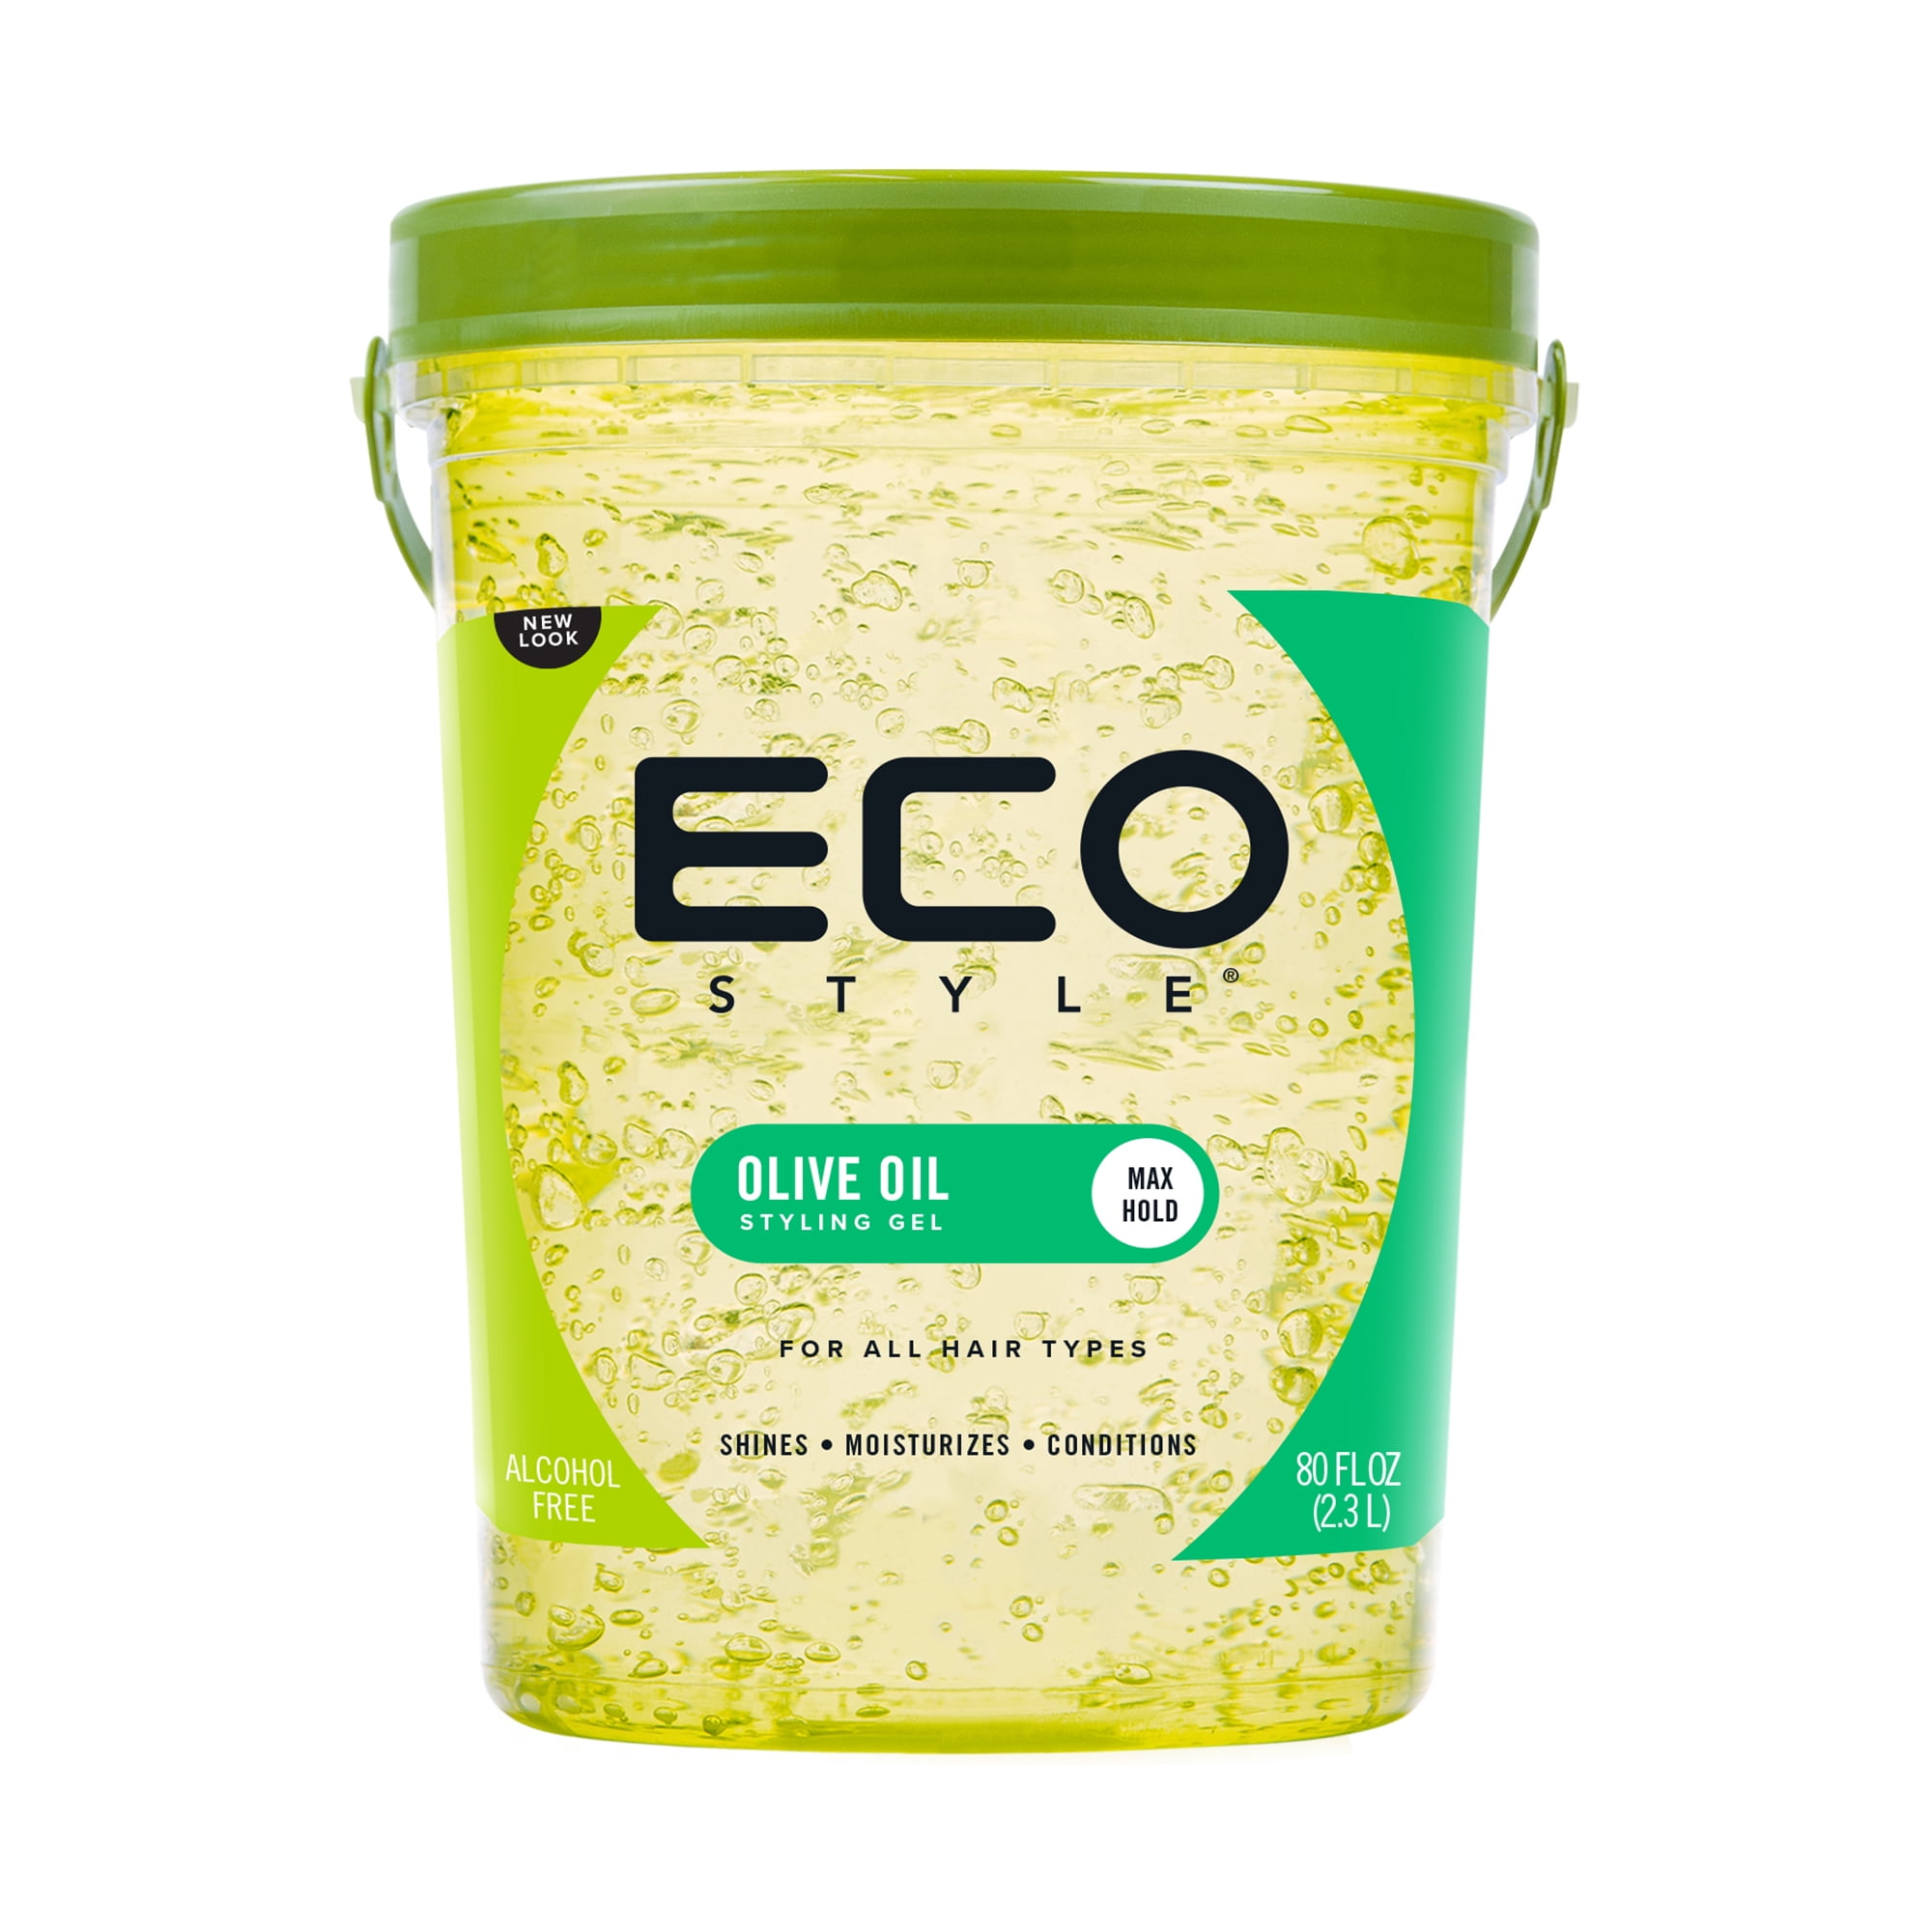 Eco Styler Olive Oil Hair Styling Gel, 80 oz., Nourishing, Unisex